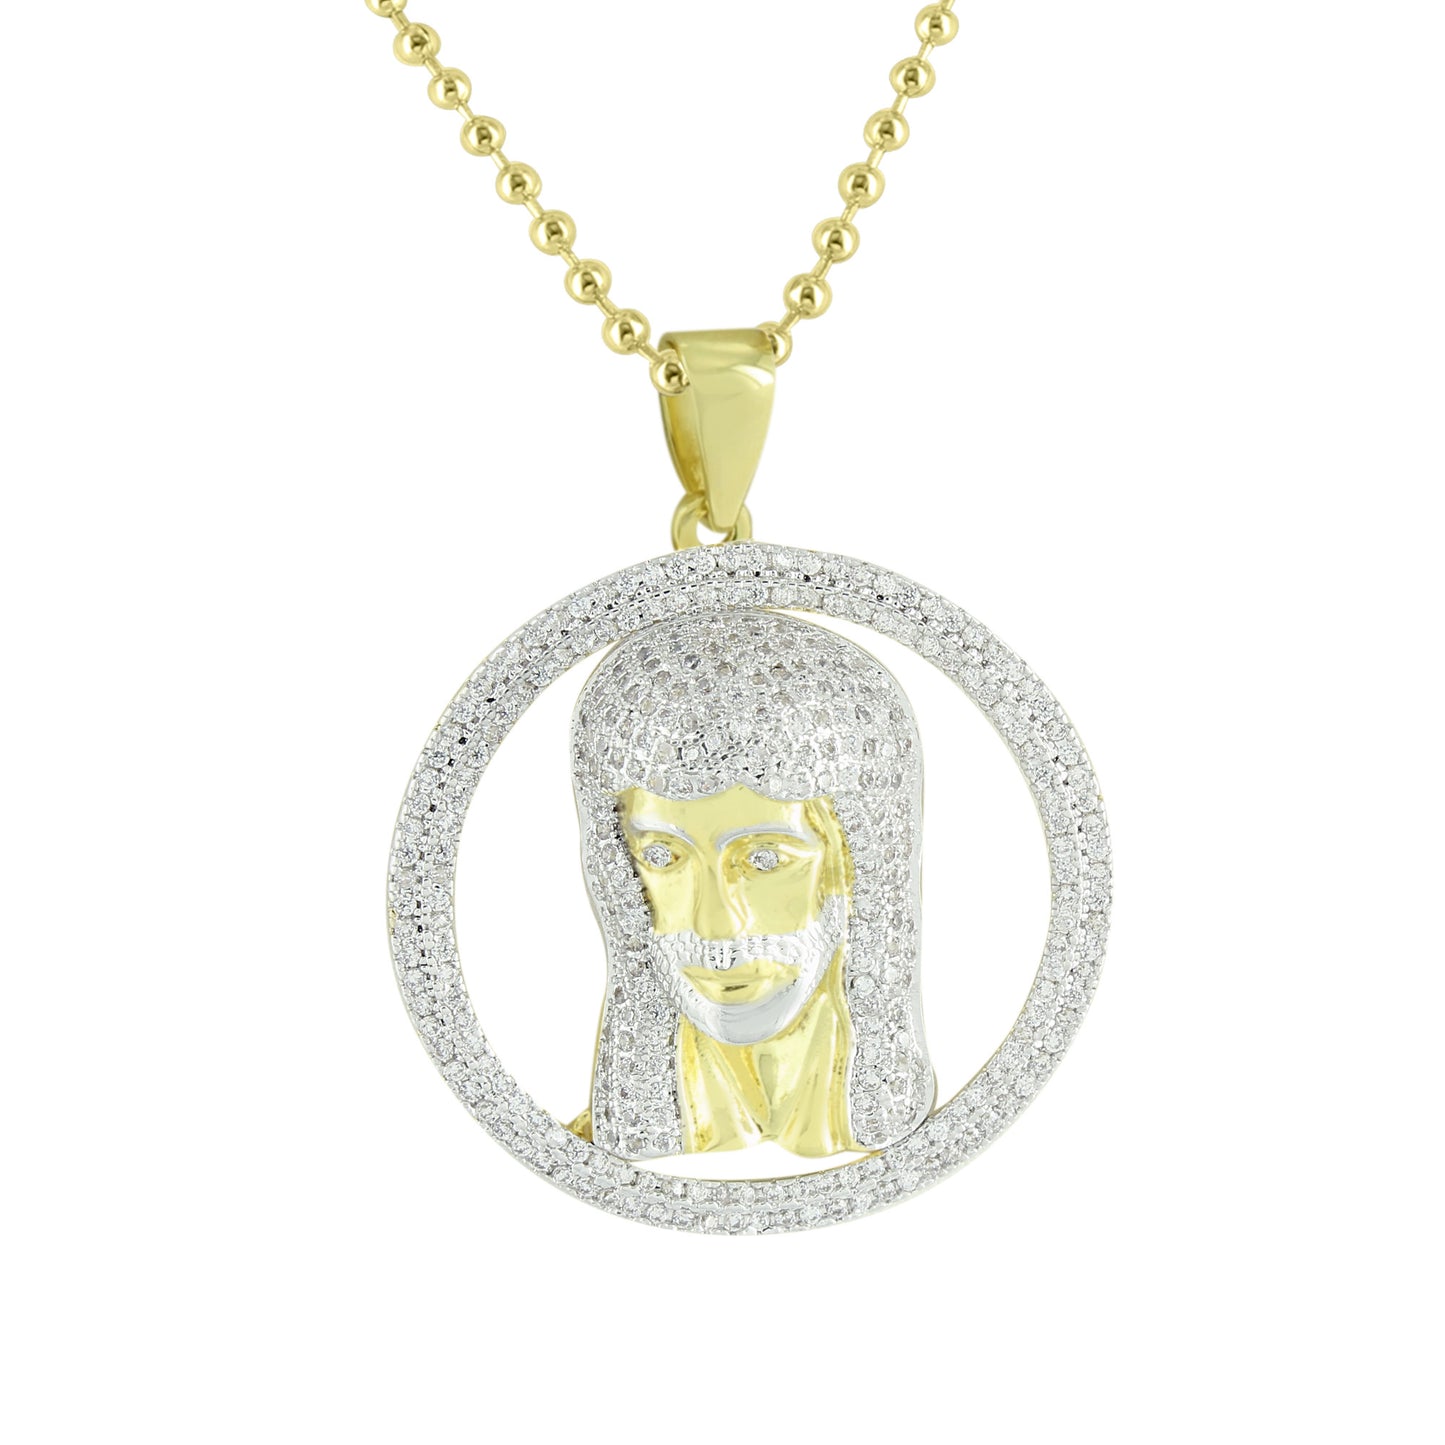 New Jesus Pendant Round Design Lab Created Diamonds 14K Yellow Gold Finish Pave Set